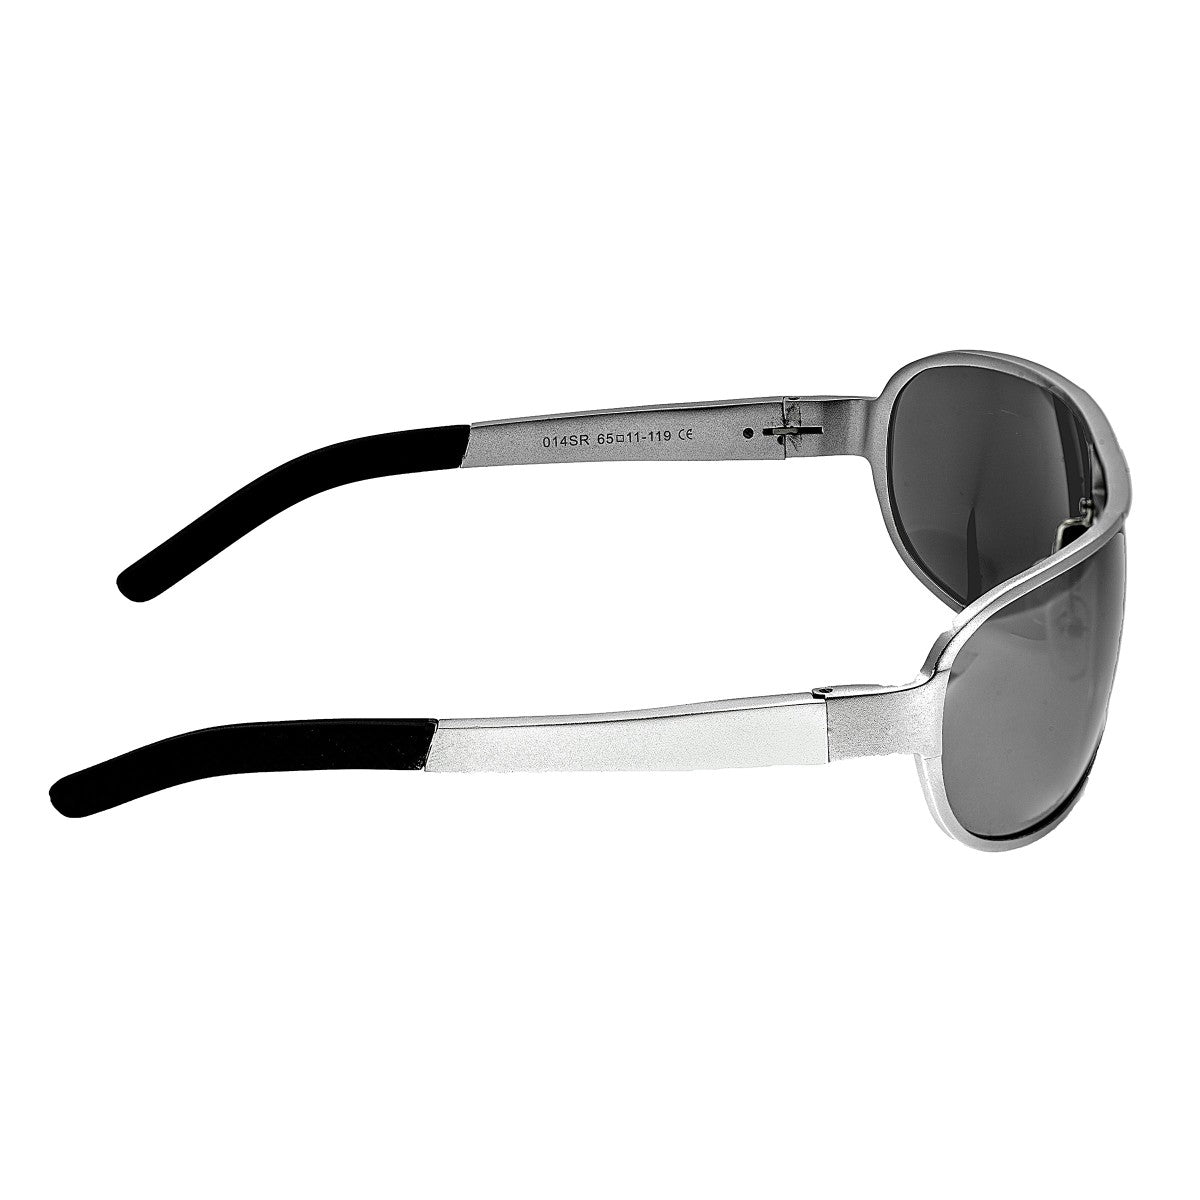 Breed Xander Aluminium Polarized Sunglasses - Silver/Silver - BSG014SR